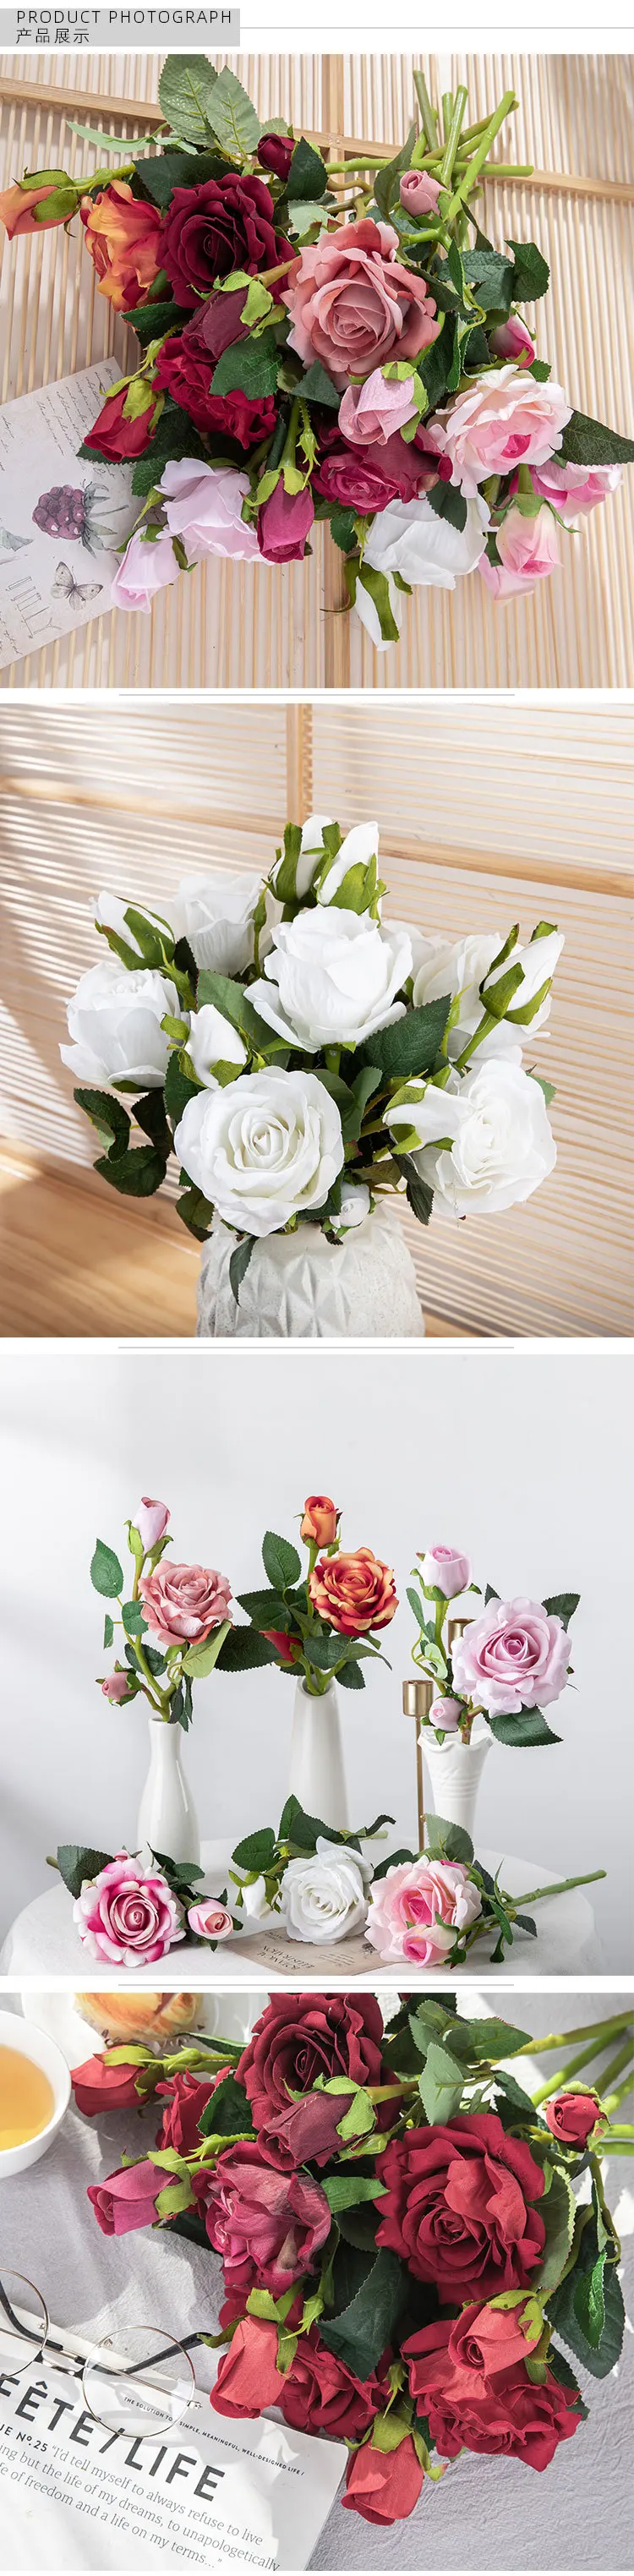 3head Velvet Rose Artificial Flower Plant Bonsai Wedding Flower Wall INS Simulation Plant Wall Home Decoration Accessories